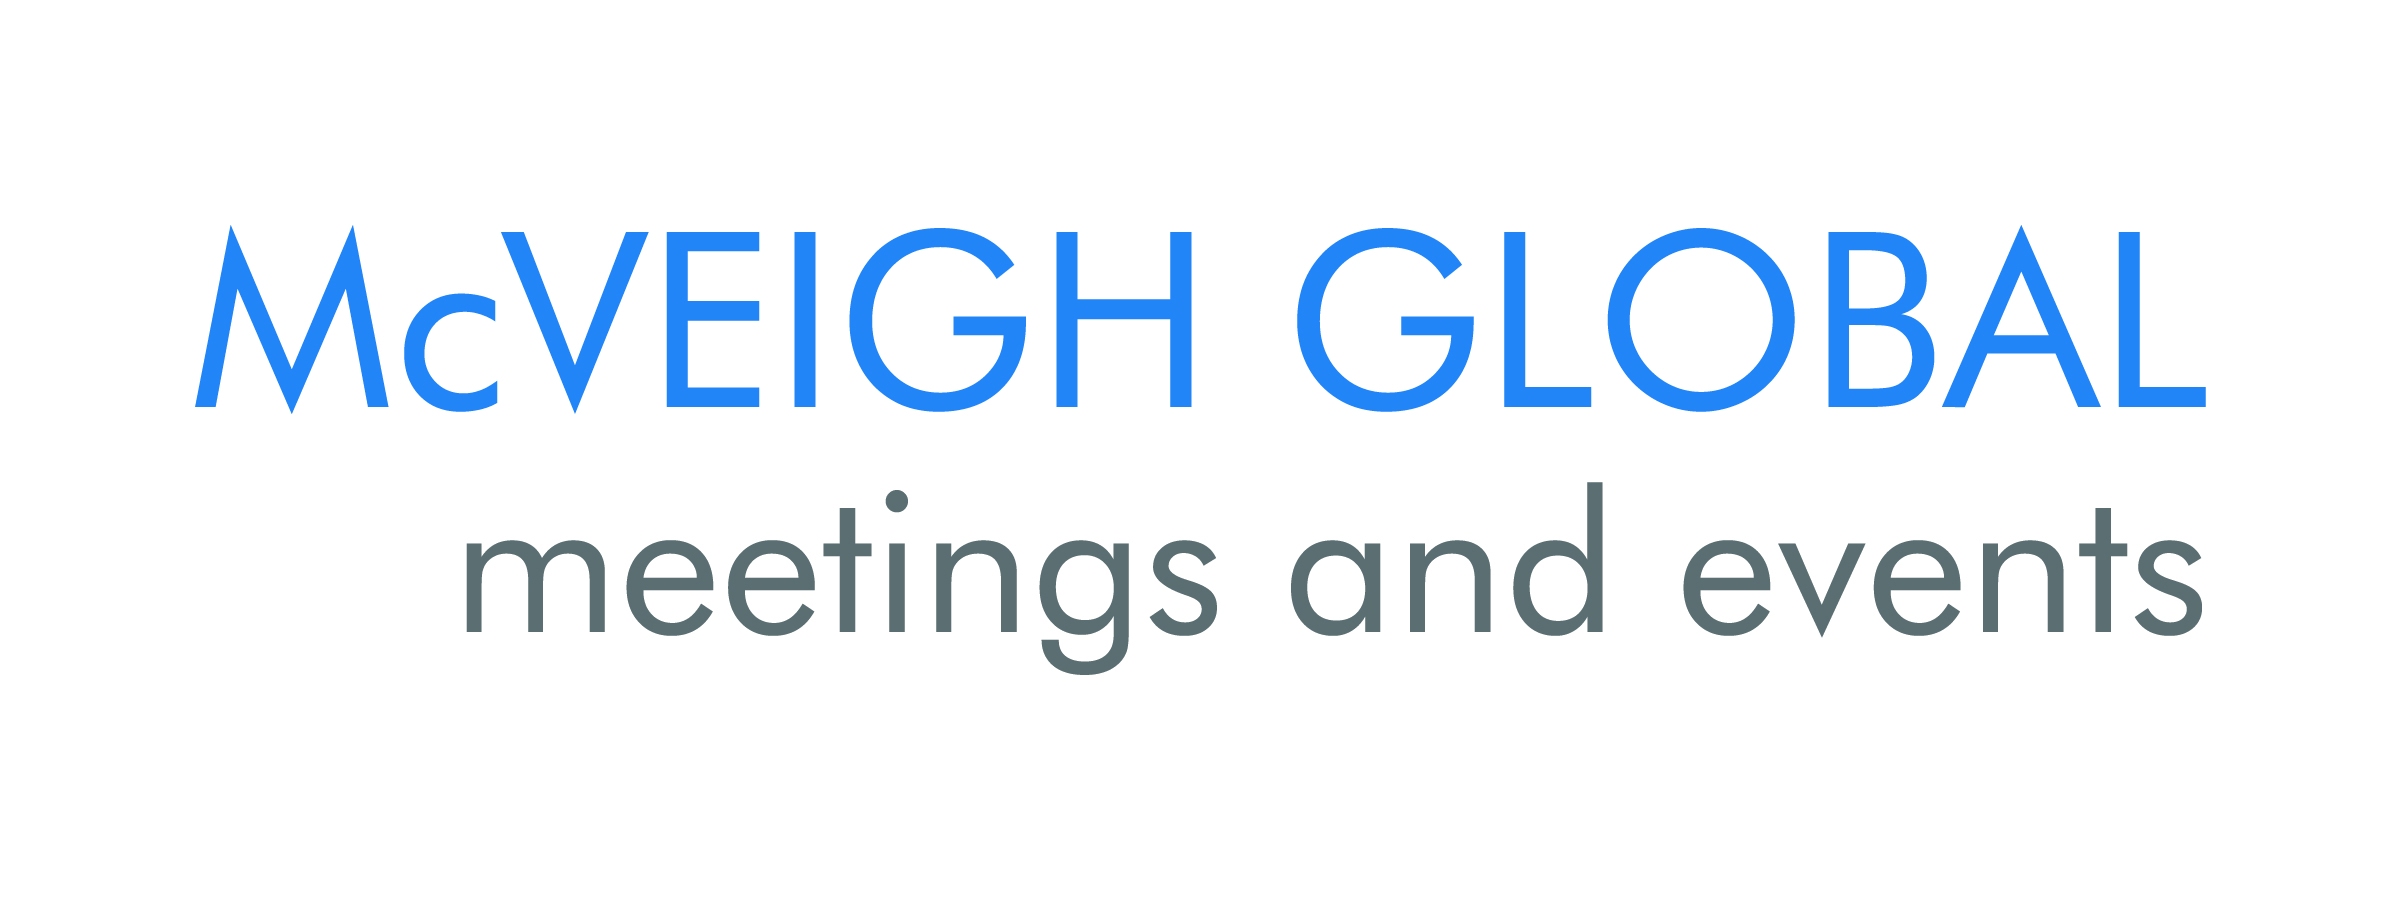 McVeigh-Global-logo-FINAL.jpg